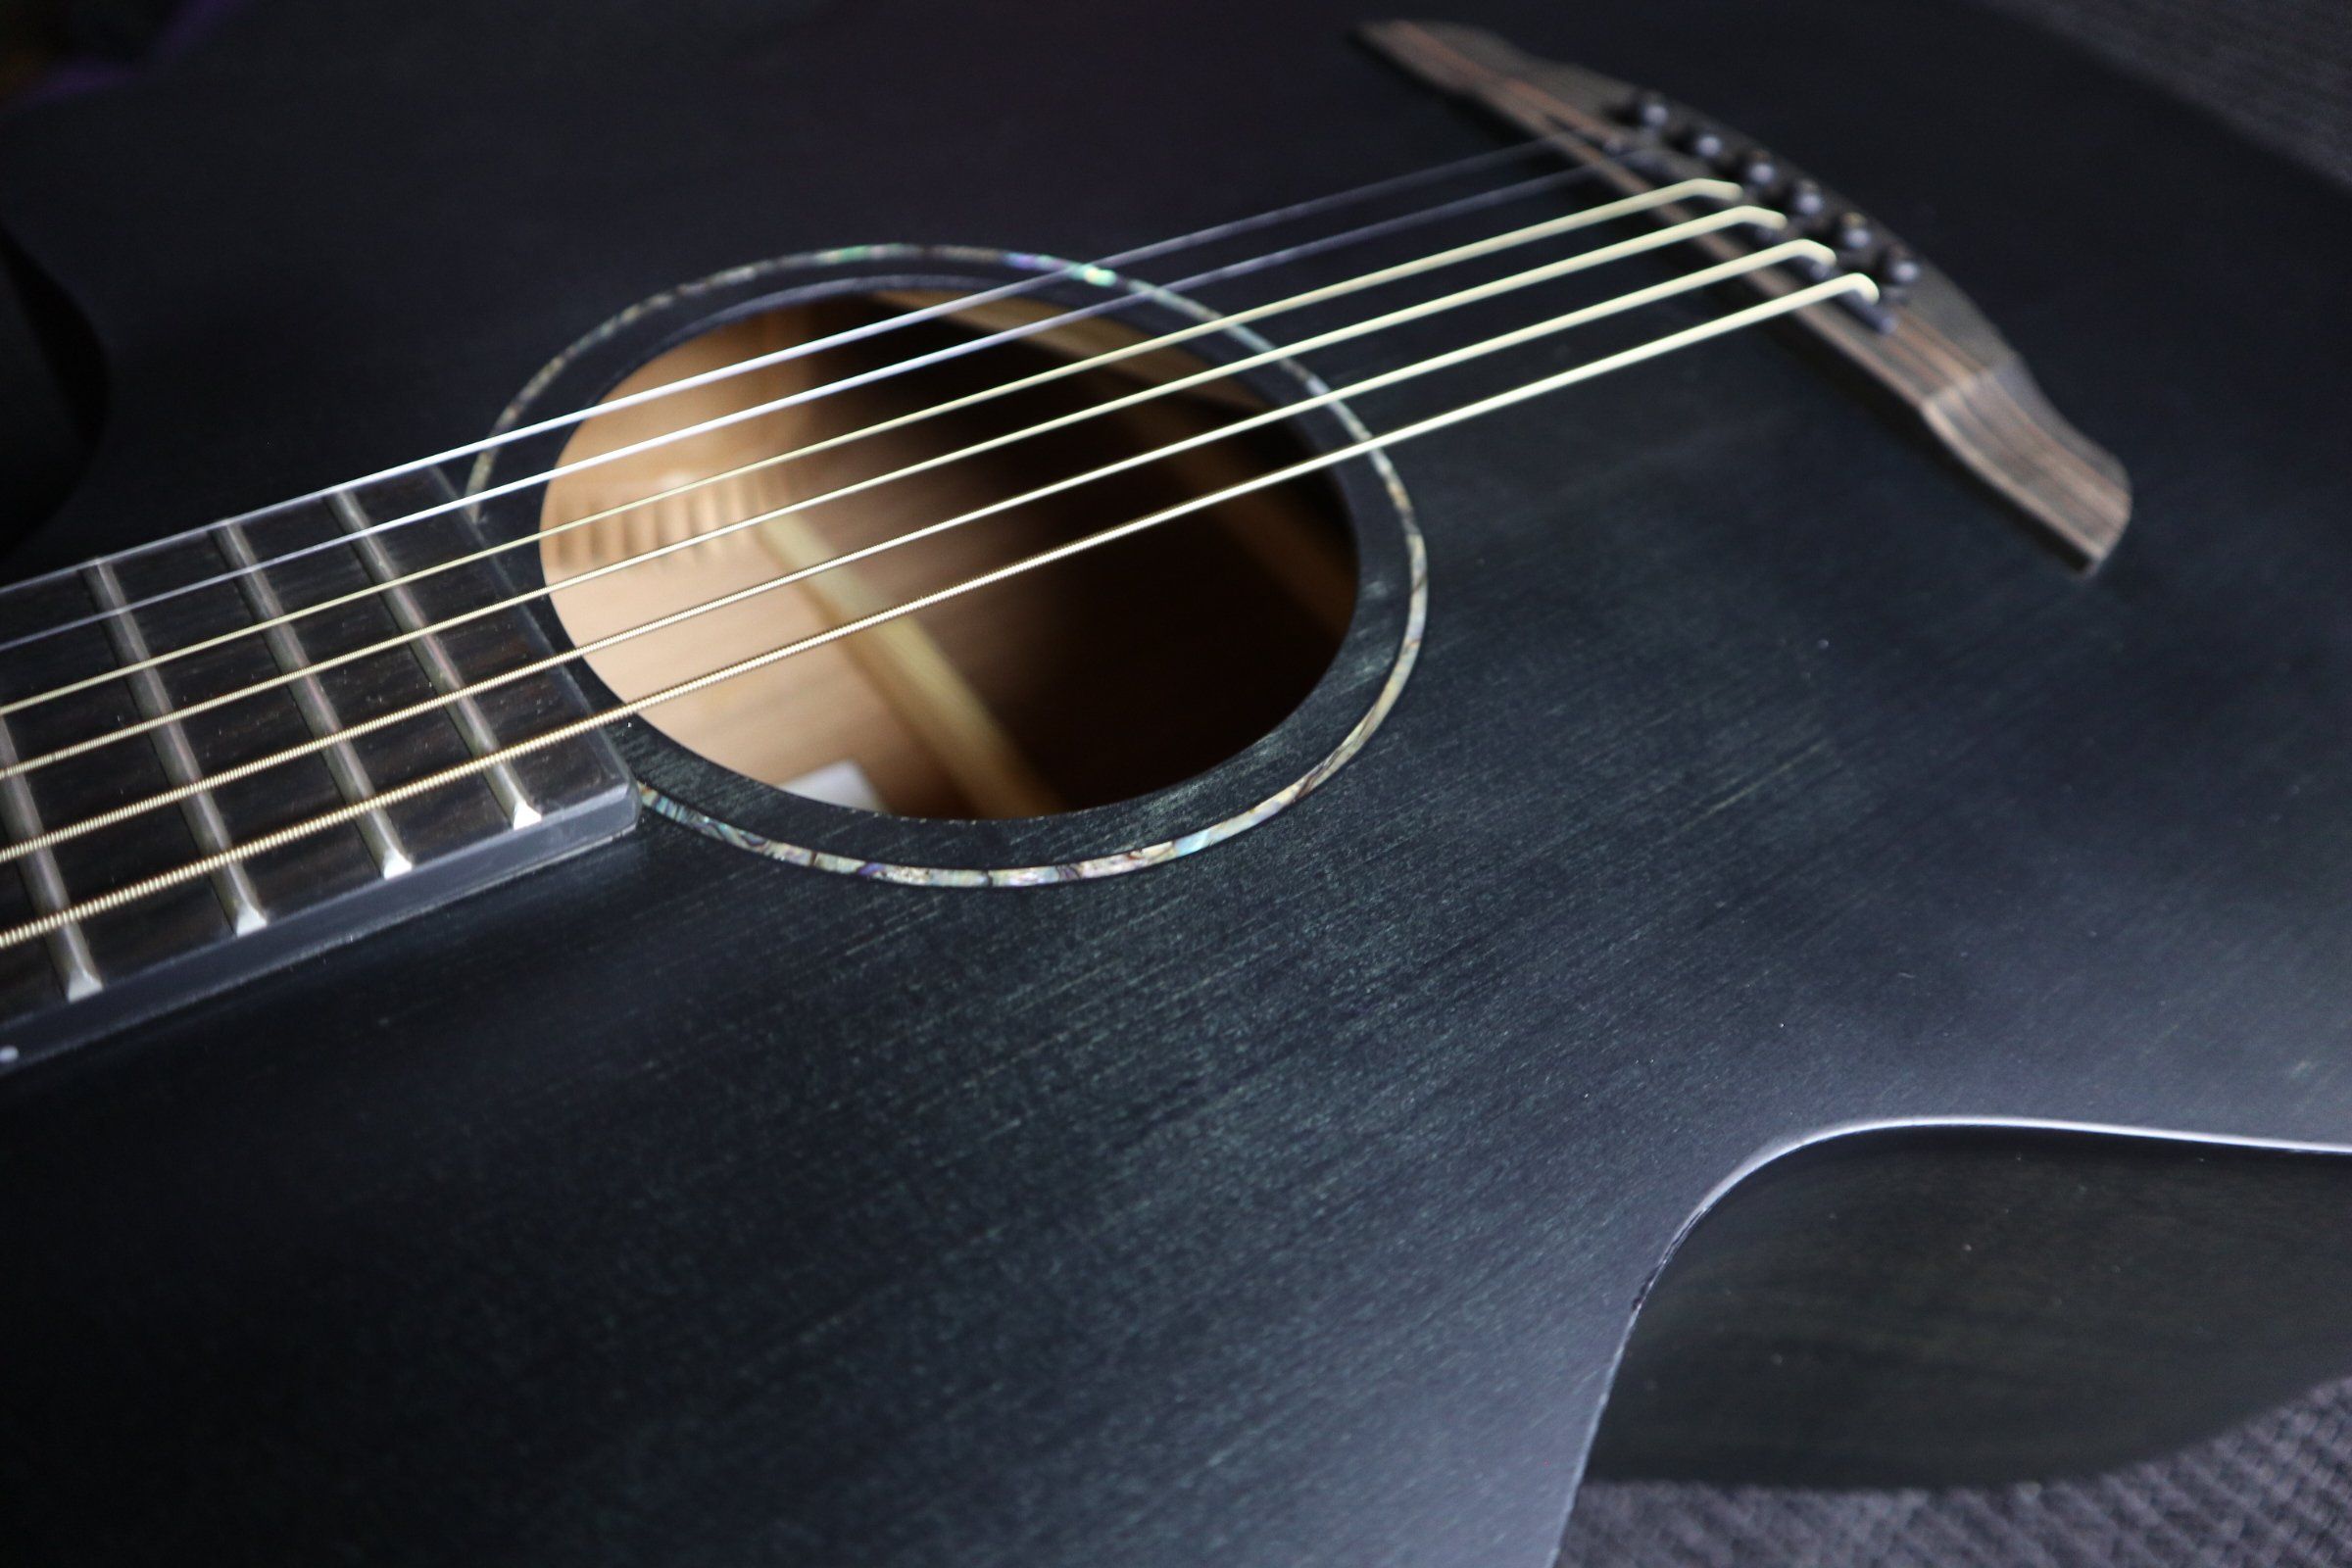 Faith FKVBK Electro Acoustic Guitar ( Venus) Inc Gig Bag, Electro Acoustic Guitar for sale at Richards Guitars.